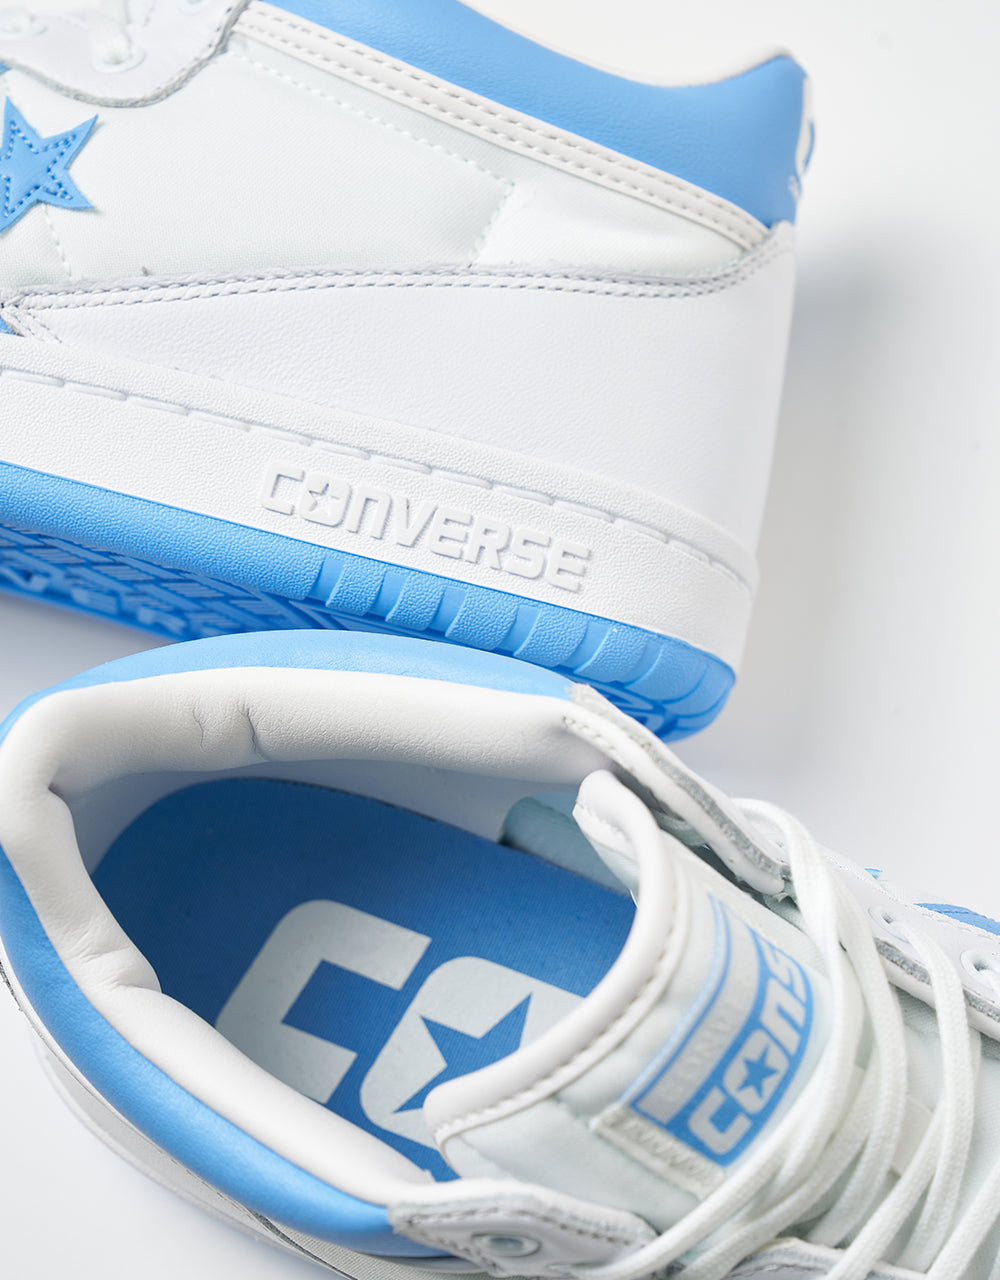 Converse Fastbreak Pro Skate Shoes - White/Lt. Blue/White